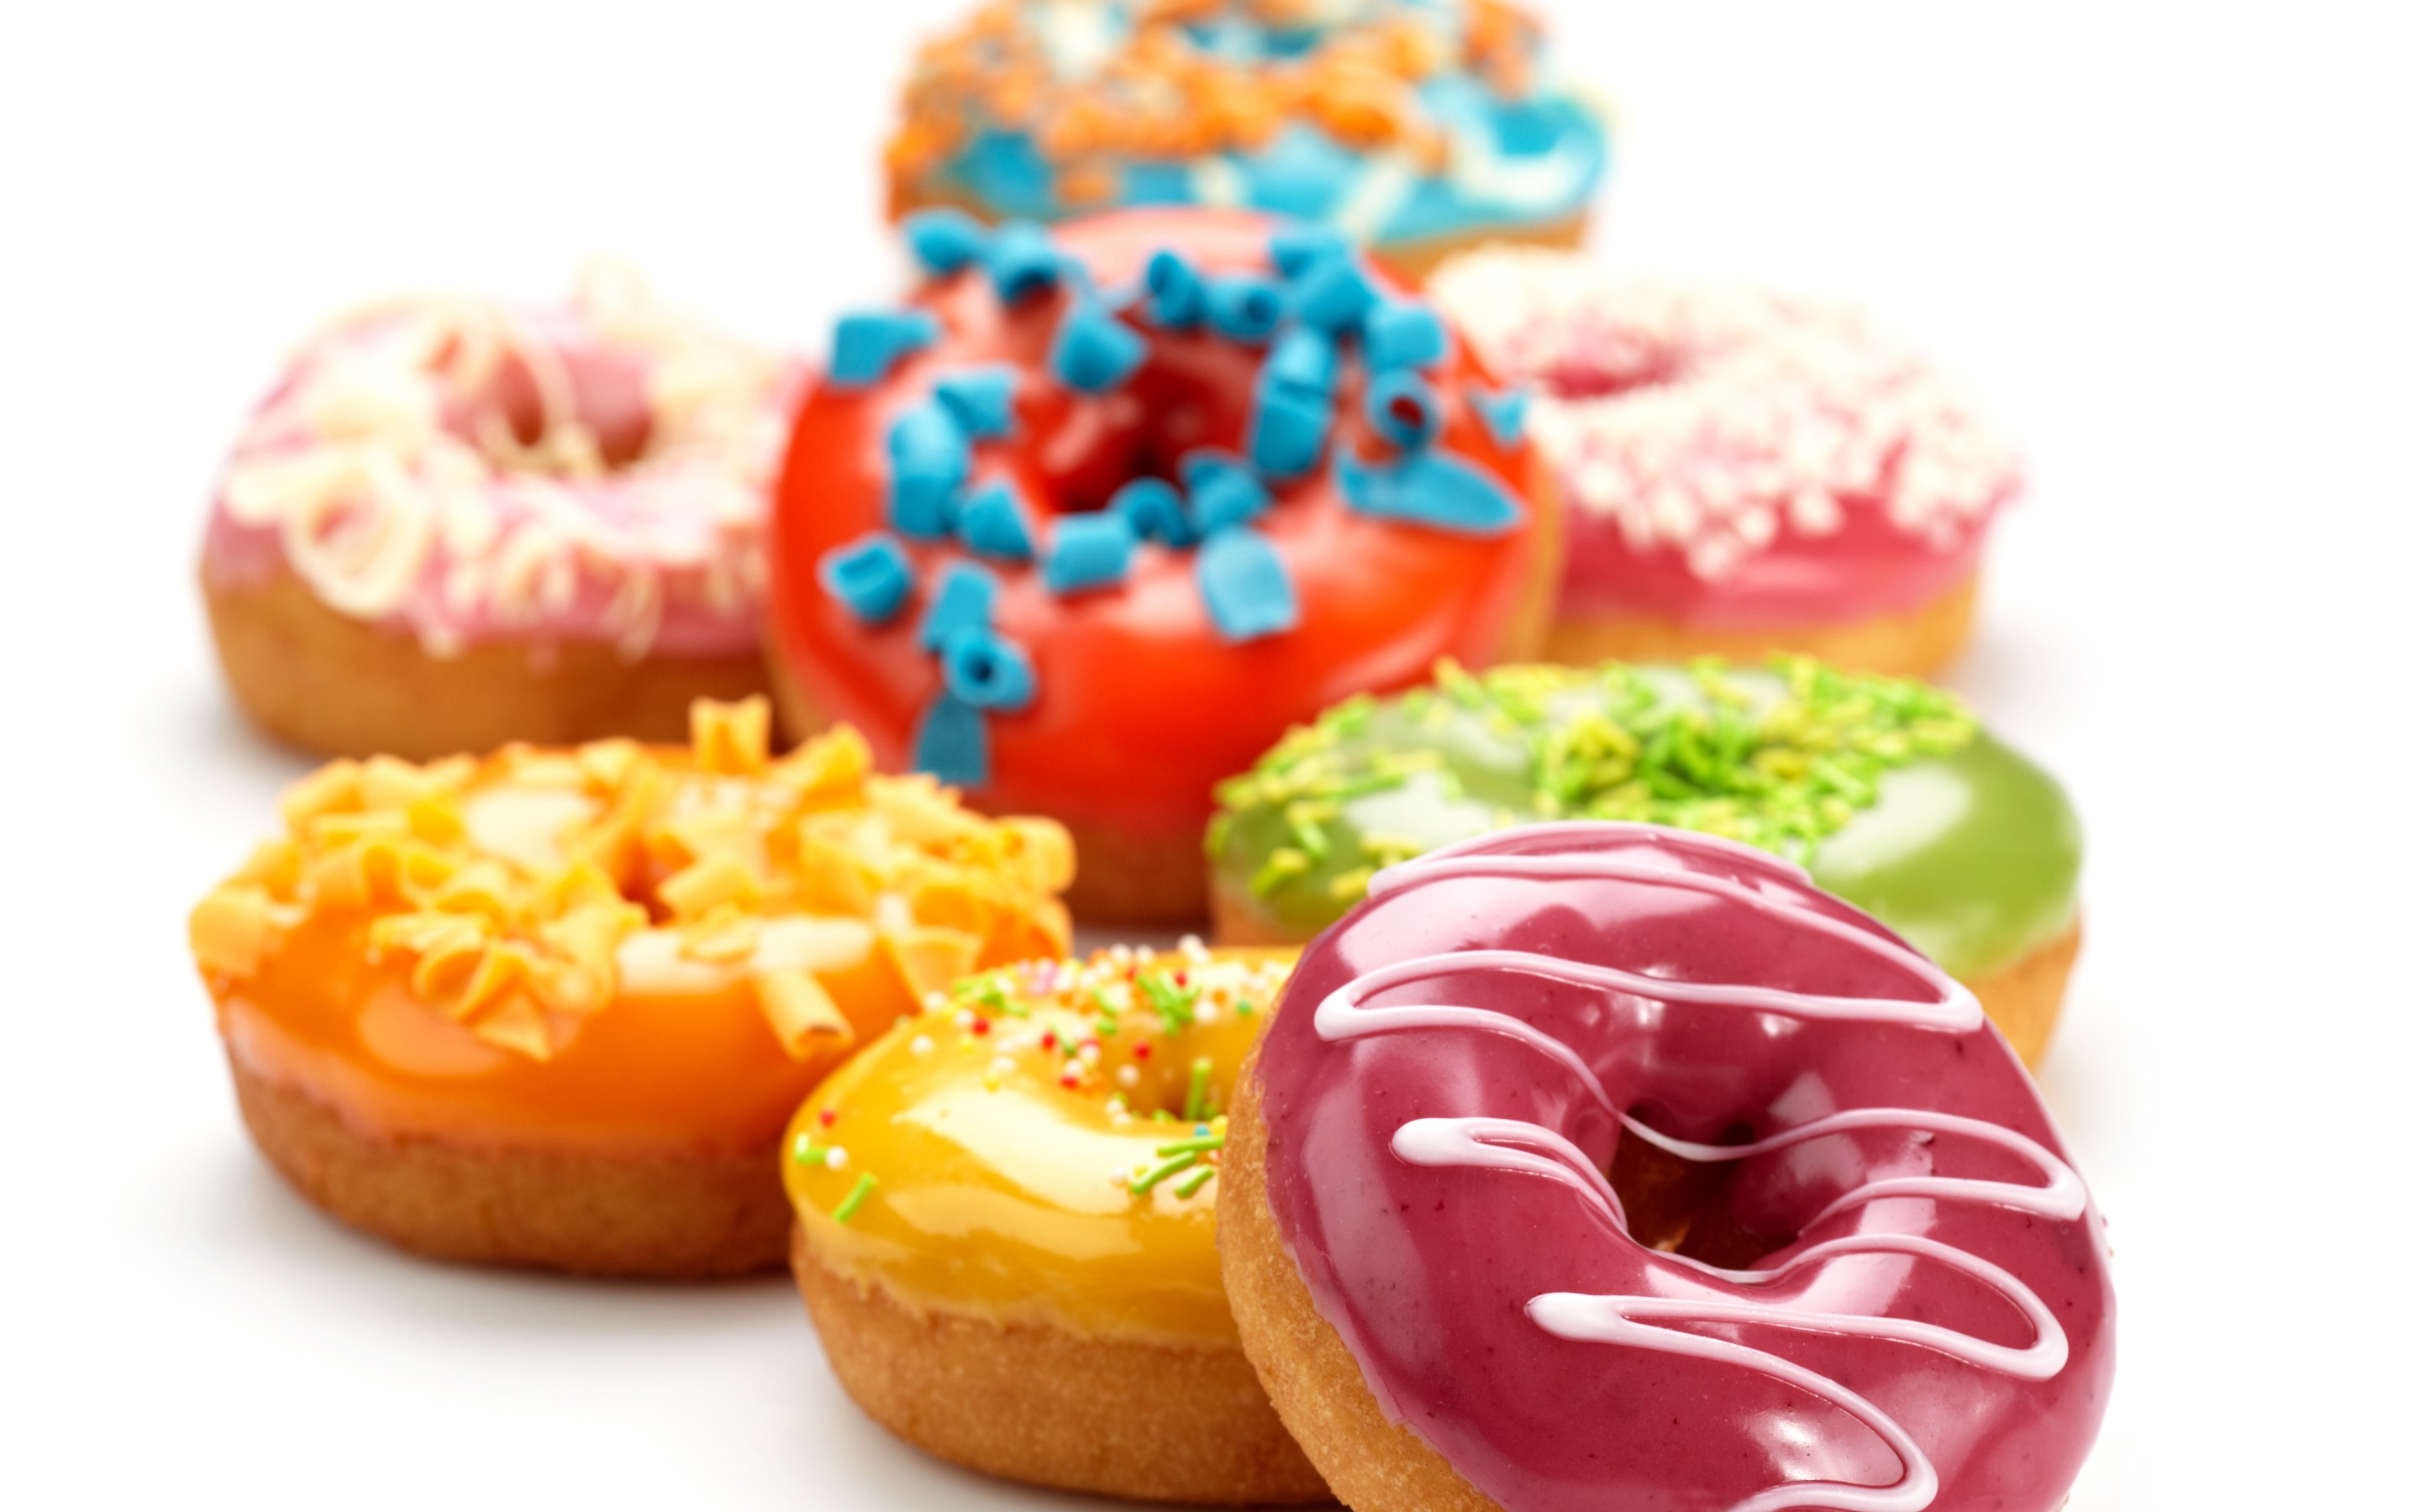 Donuts - Food Wallpaper (35172562) - Fanpop